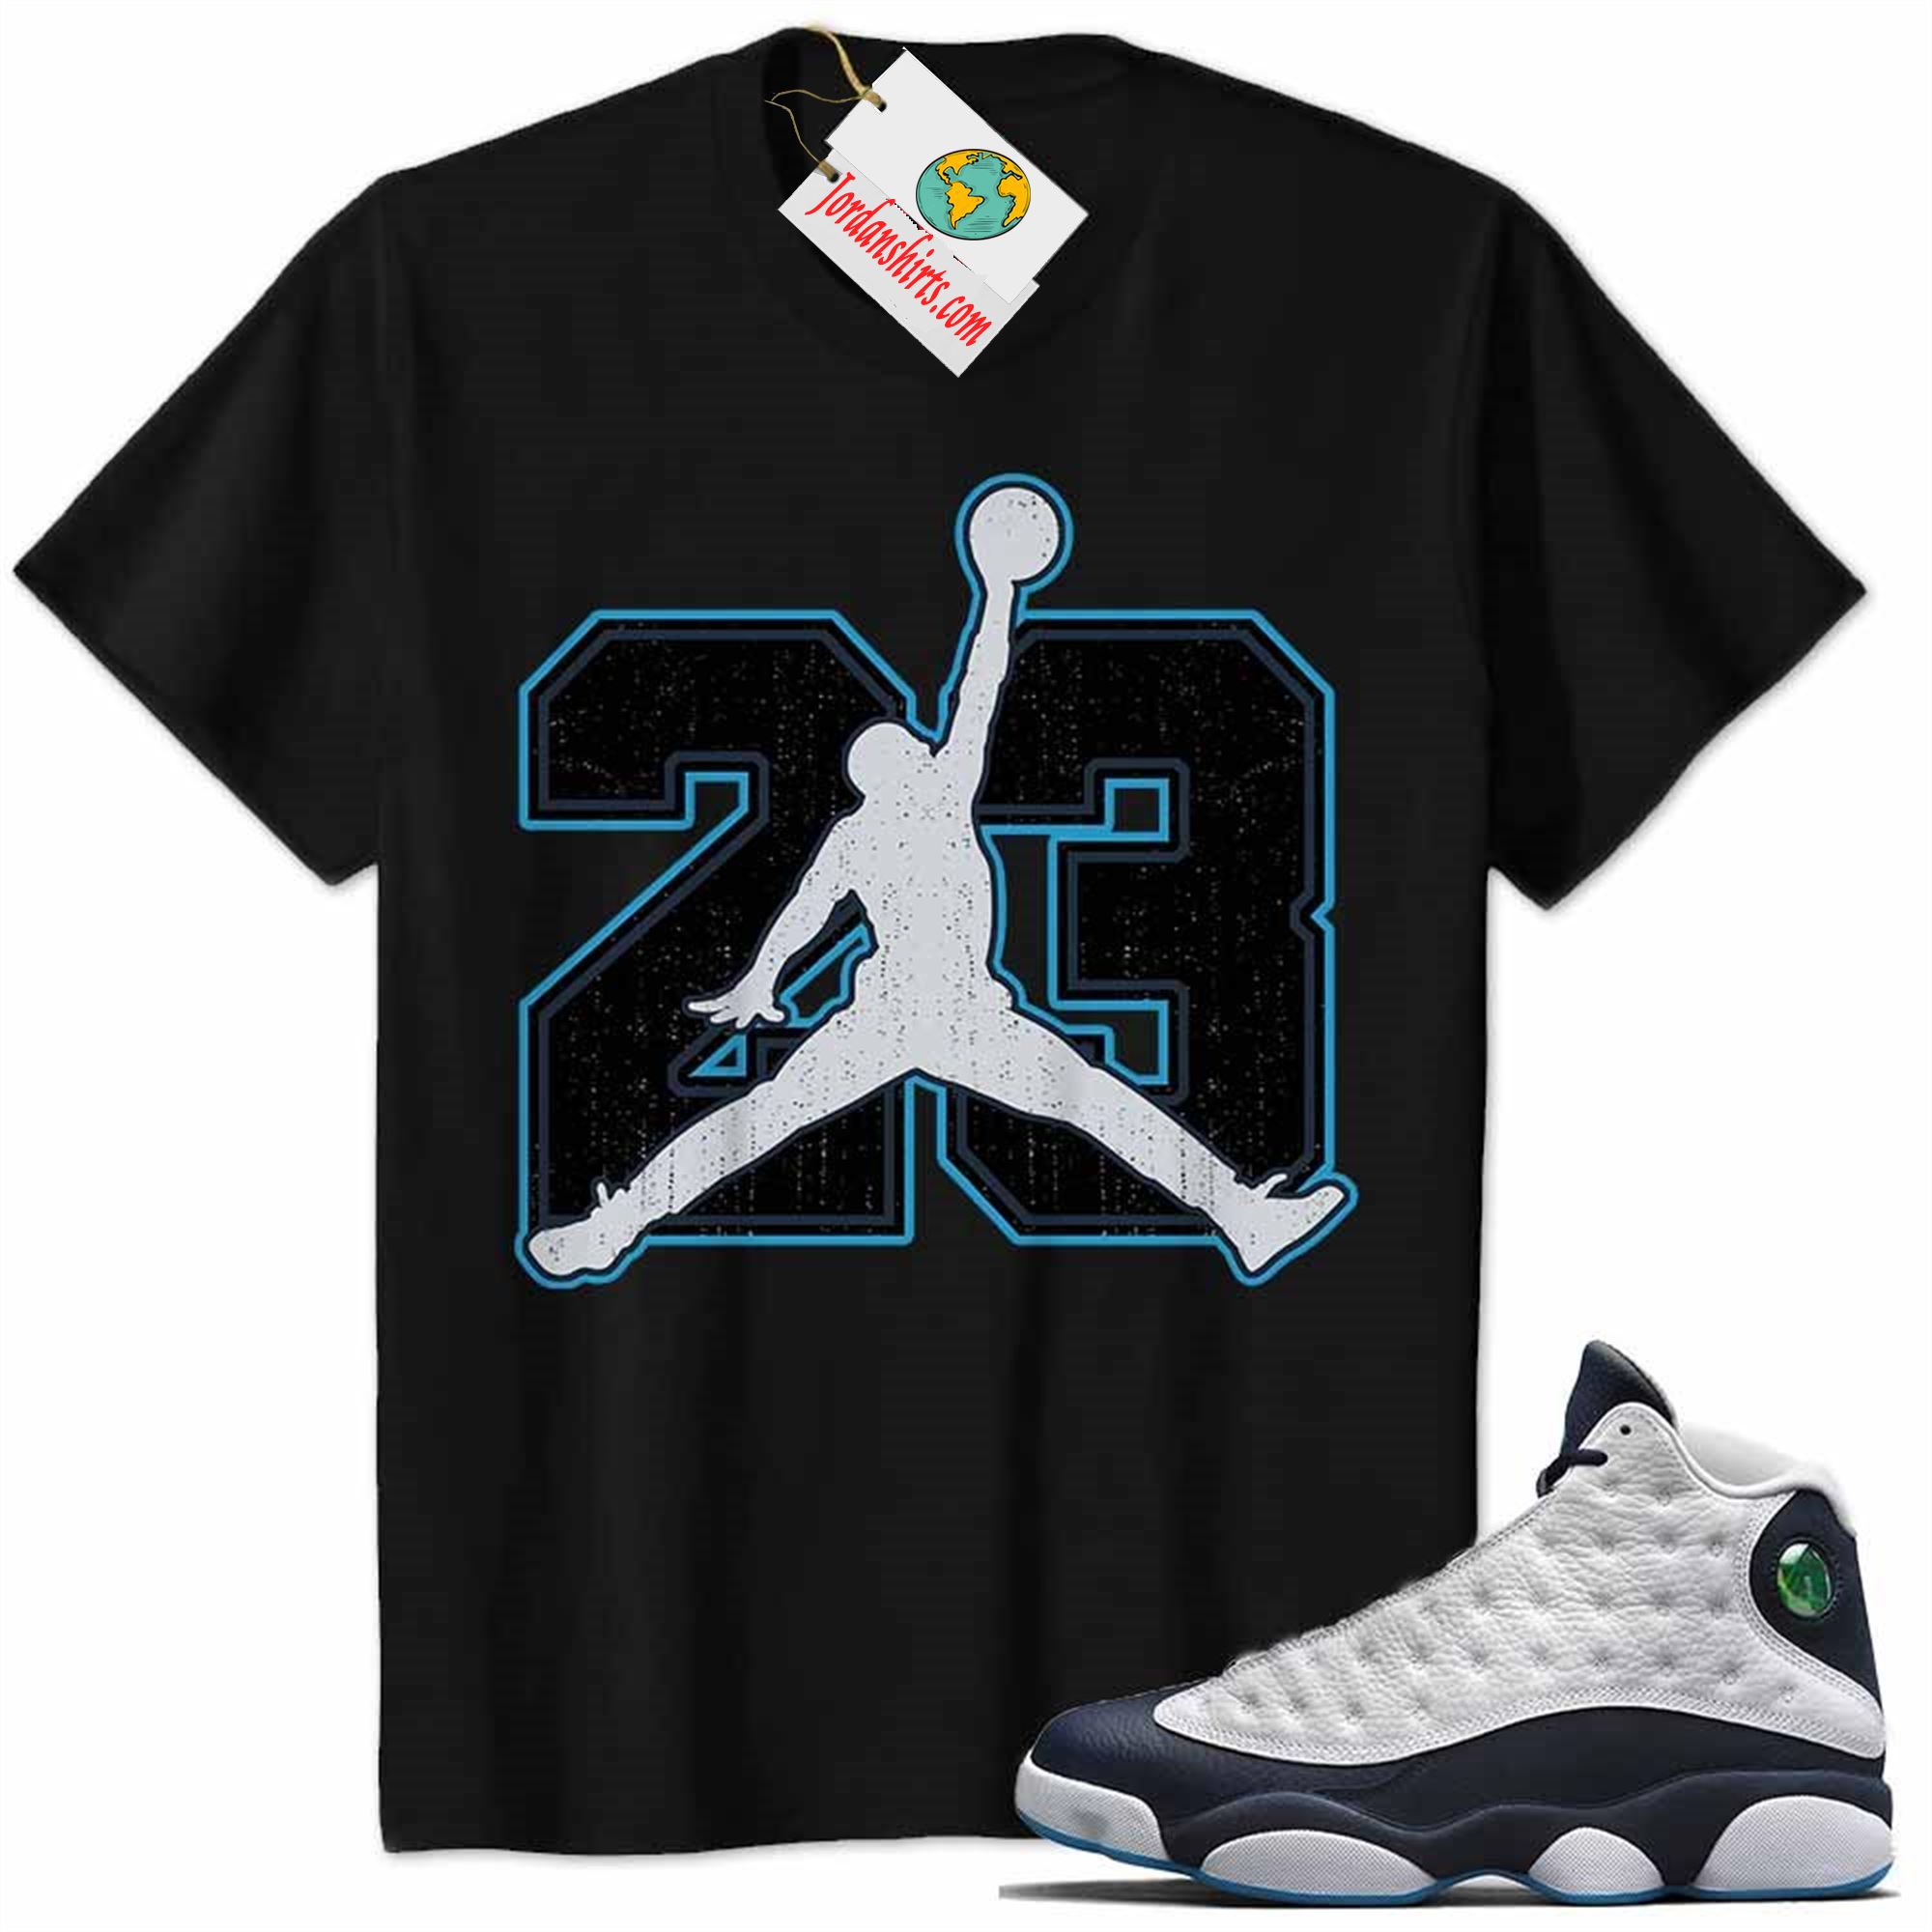 Jordan 13 Shirt, Jordan 13 Obsidian Shirt Jumpman No23 Black Size Up To 5xl